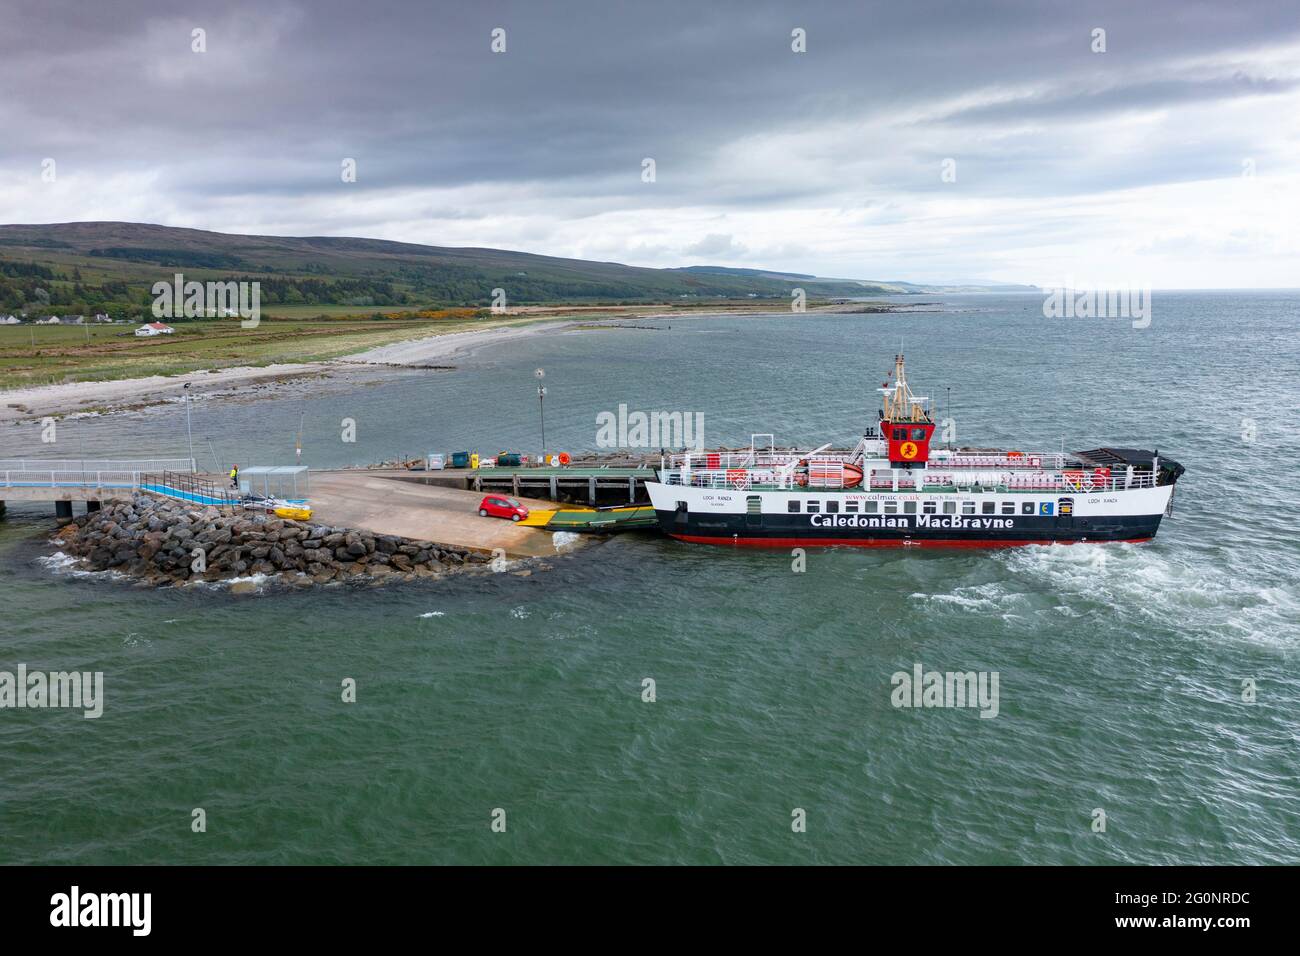 Caledonian Macbrayne Isle of Gigha passenger ferry terminal at Tayinloan, Kintyre, Scotland UK Stock Photo